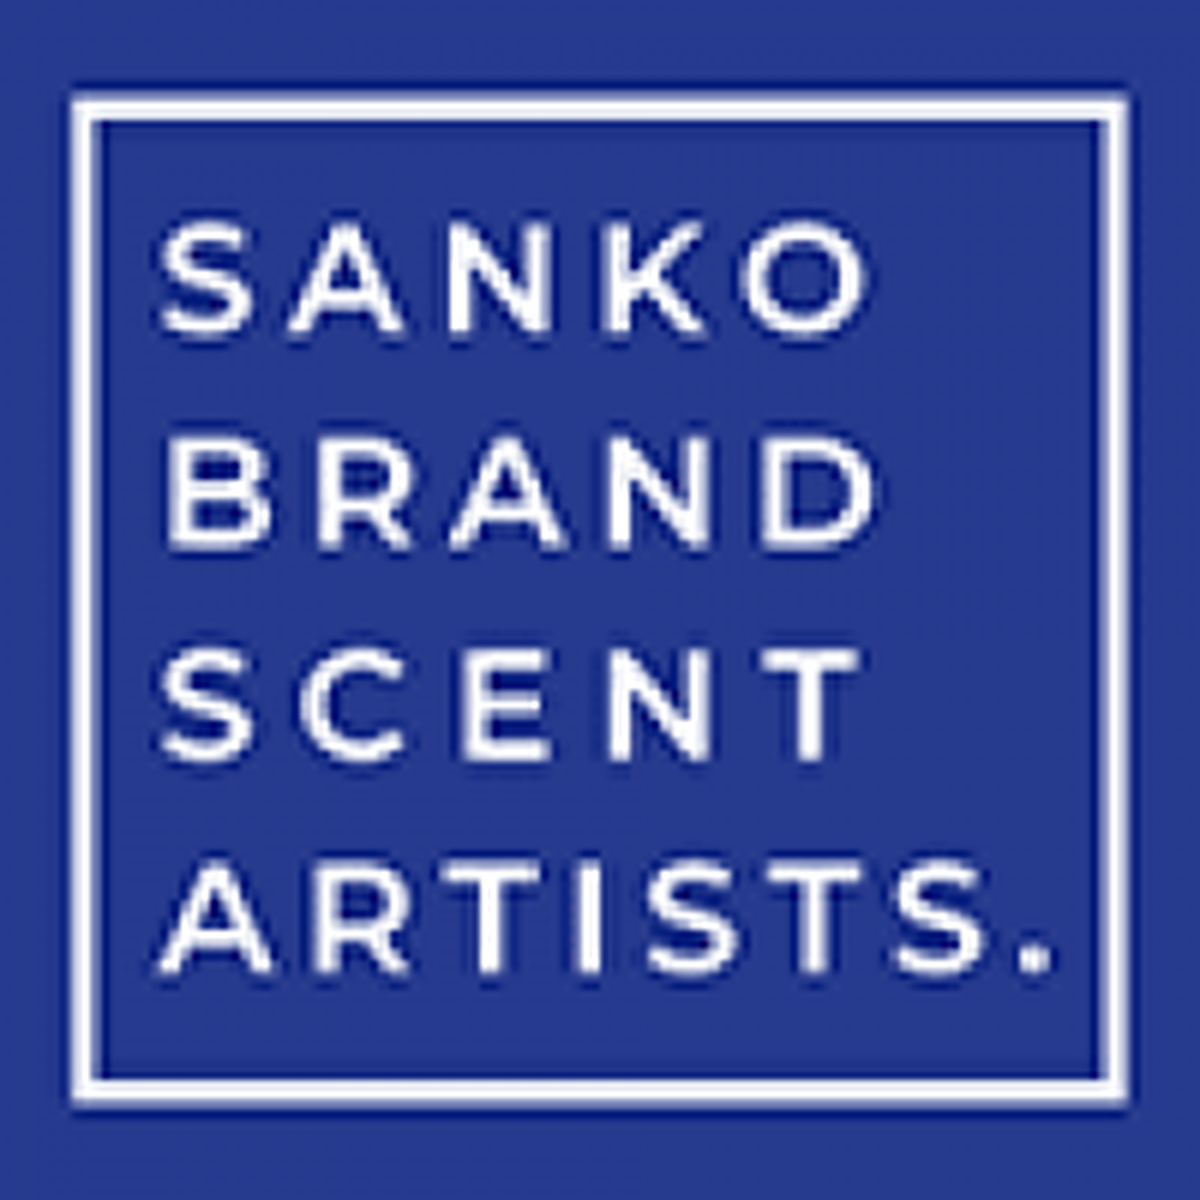 Sanko Brand Scent